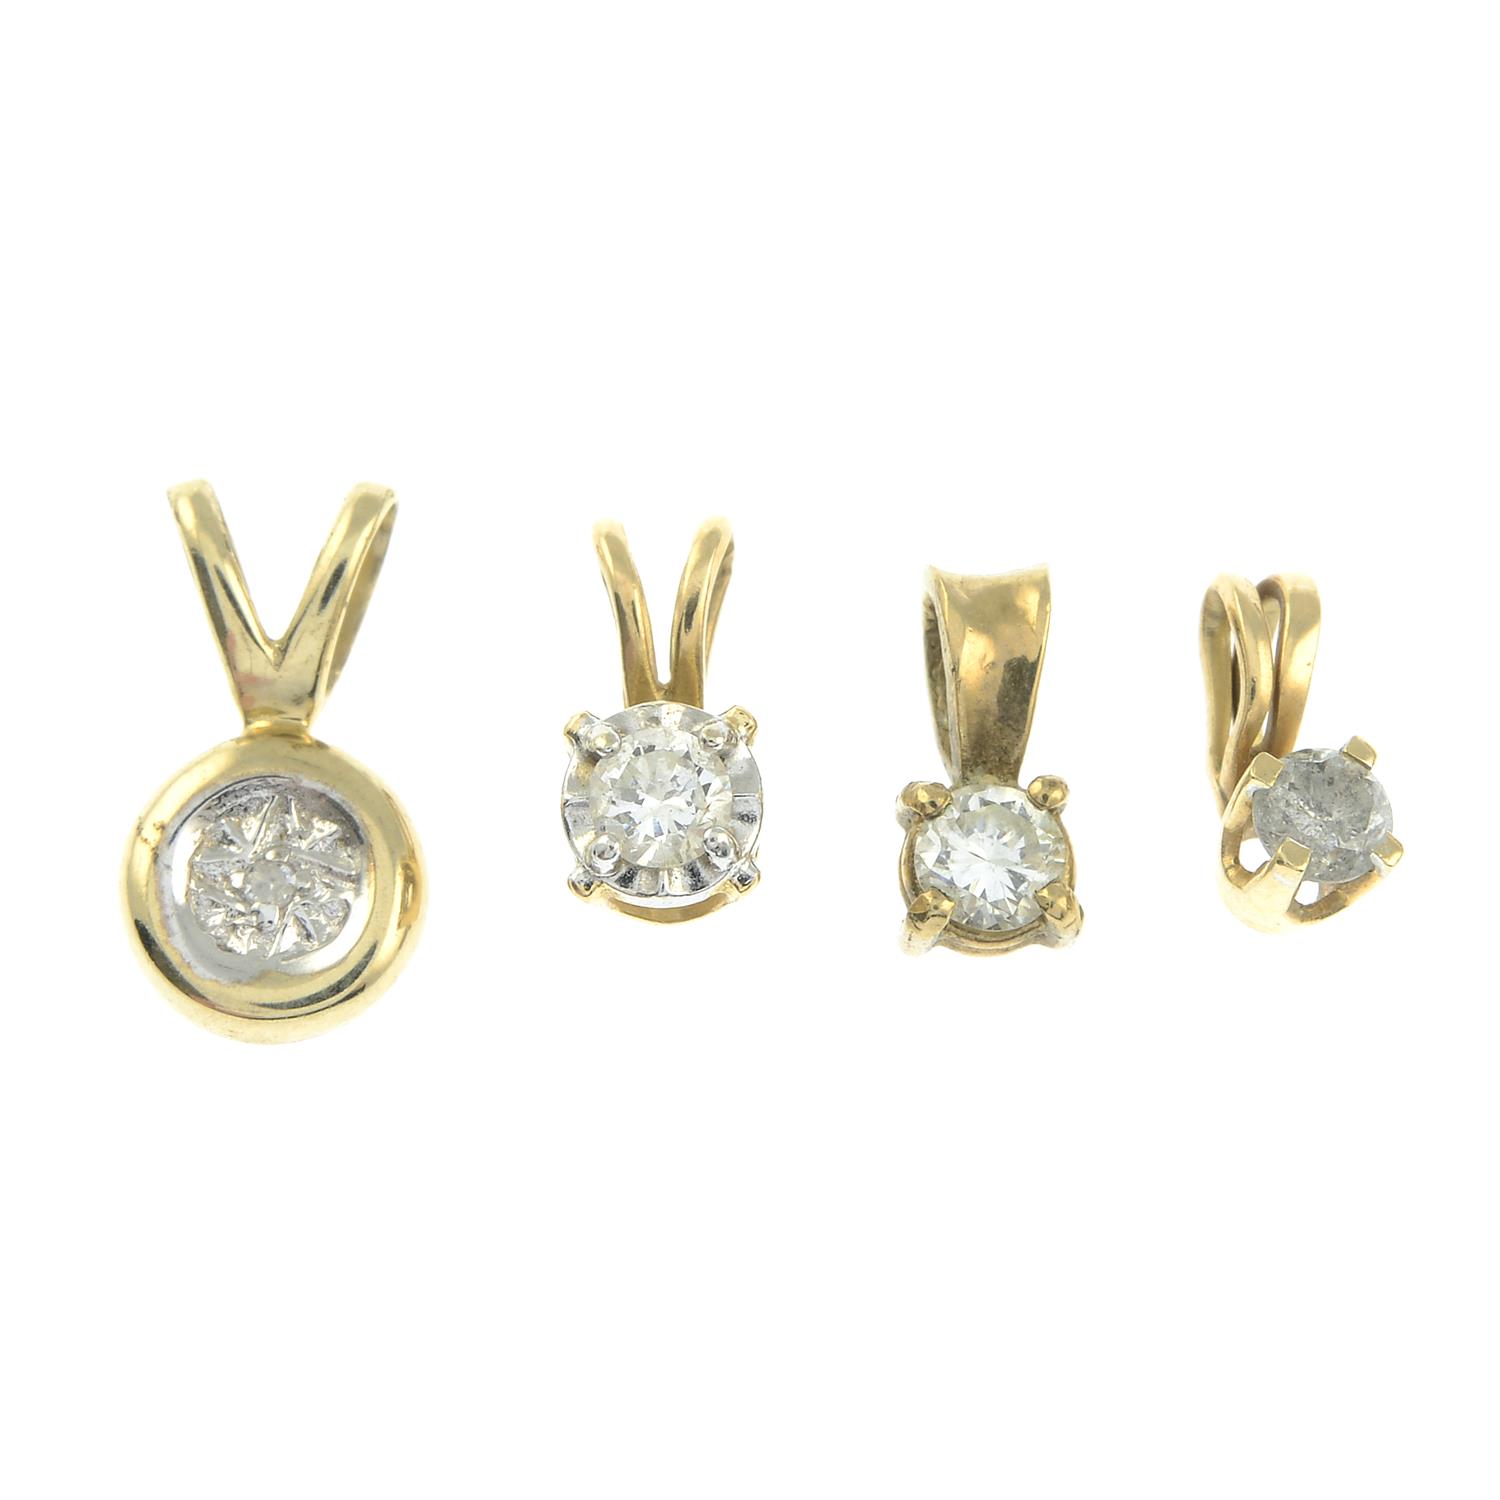 Four diamond pendants.